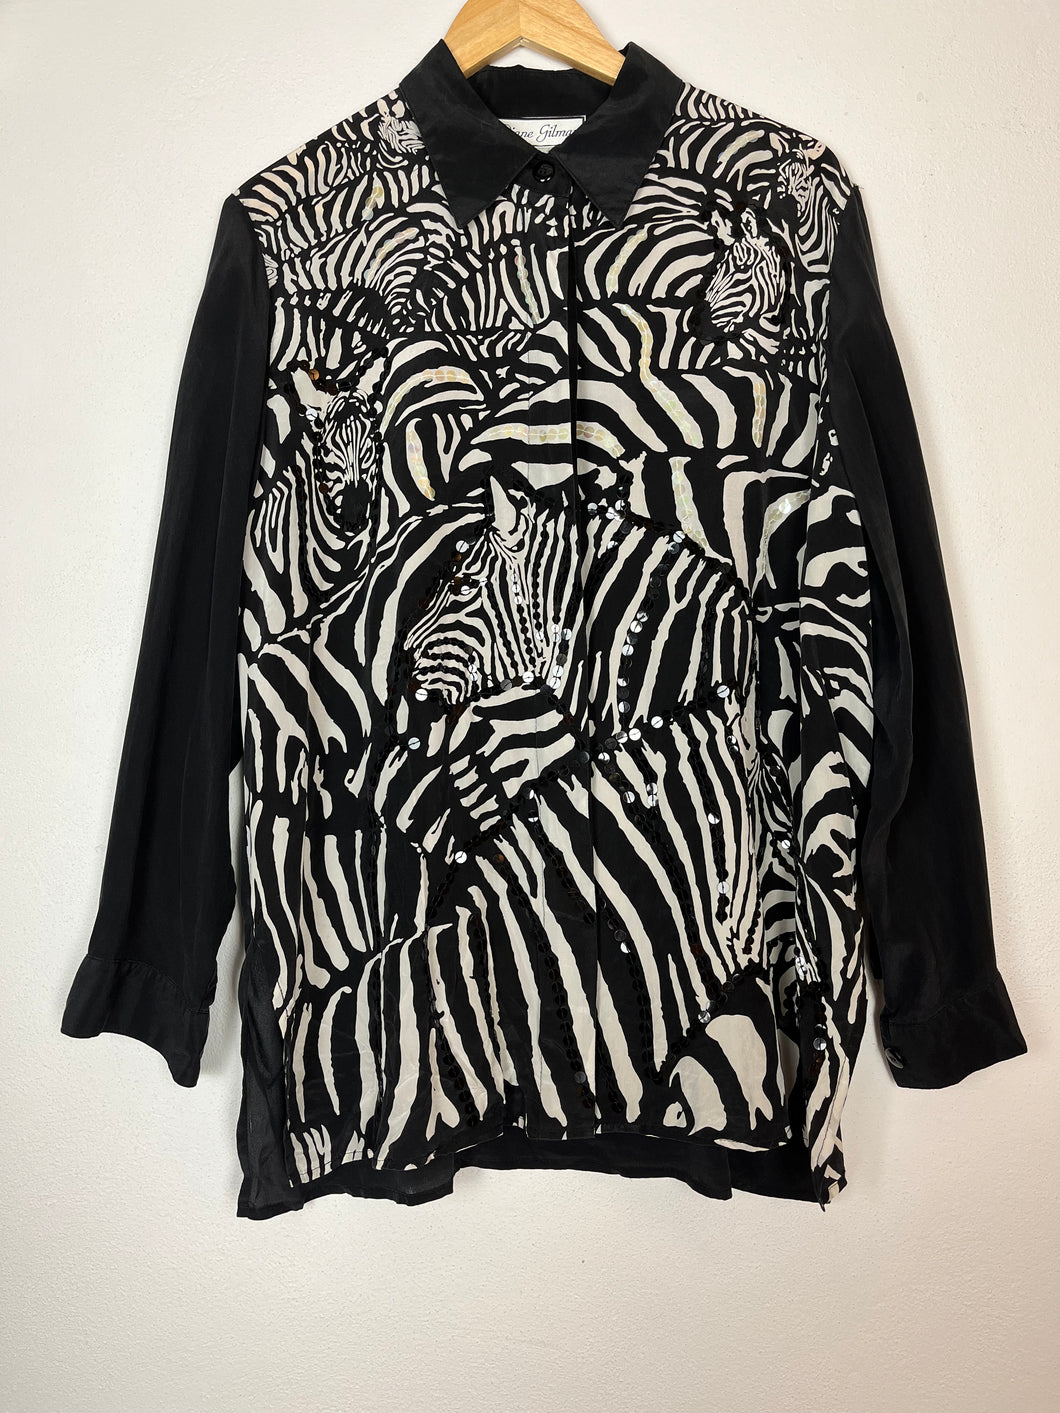 Zebra Print Sequin Silk Button Up - Large